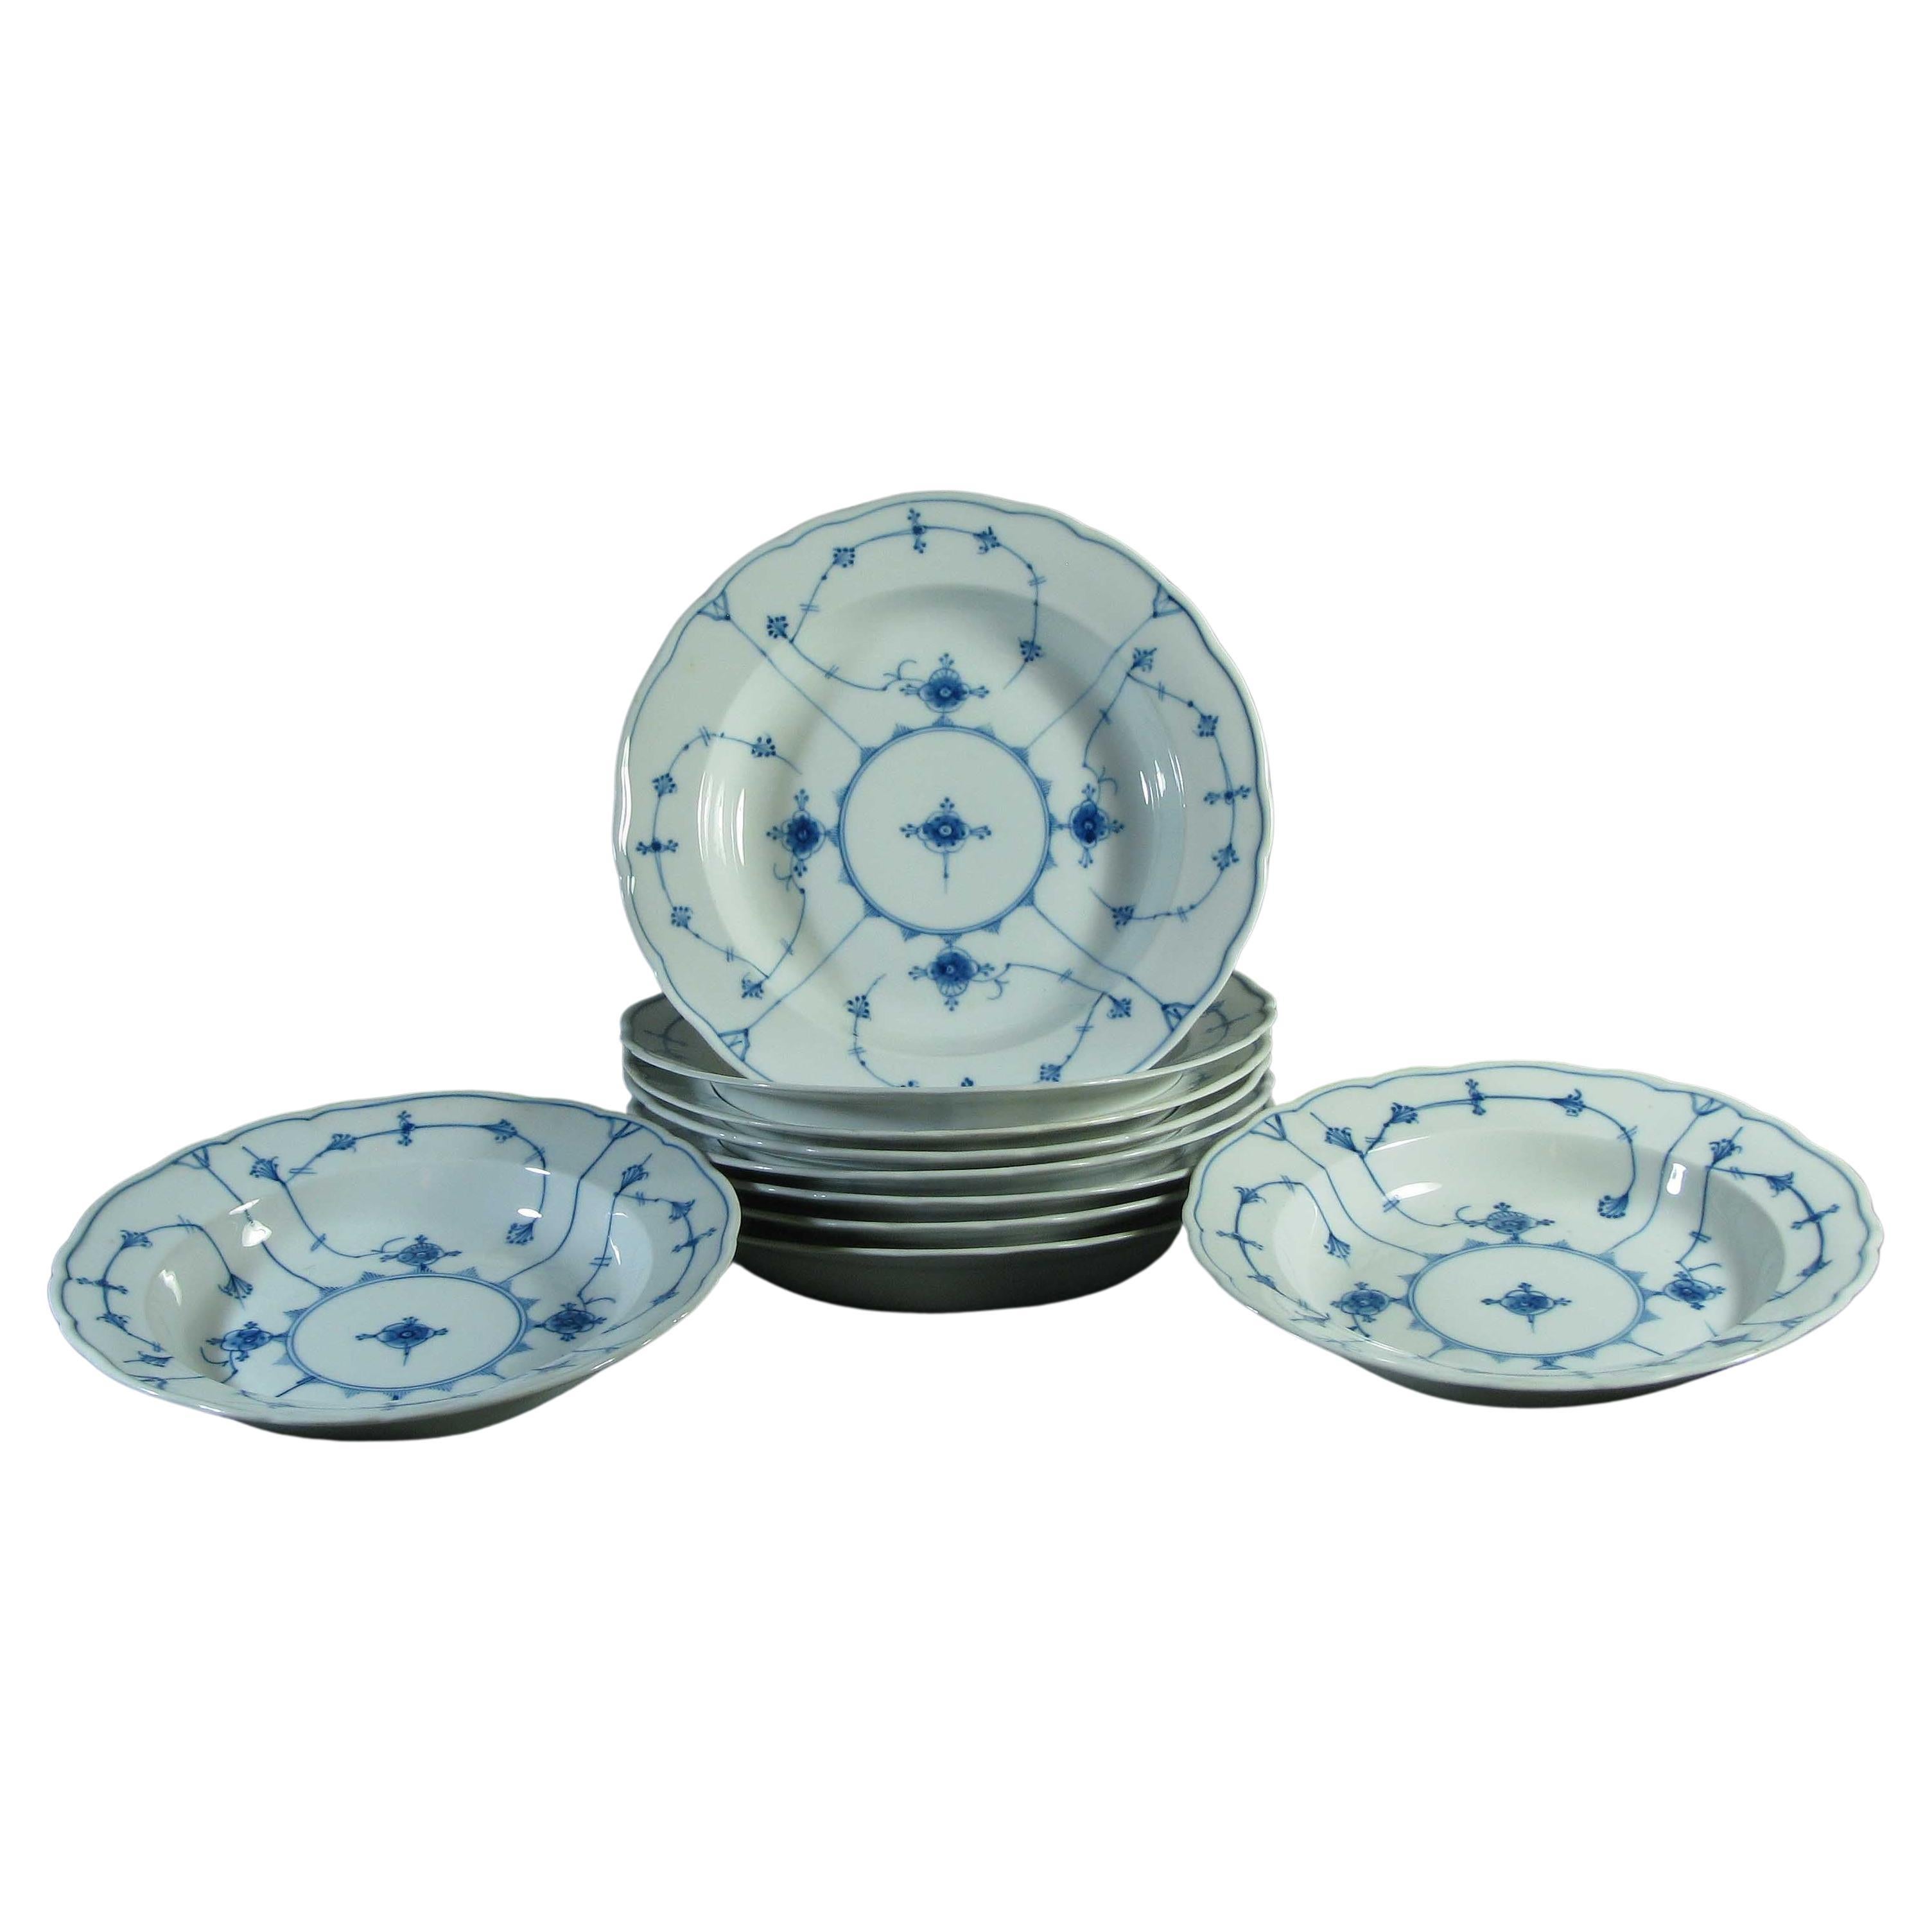 Lot of Ten Porsgrund Porcelain Deep Plates